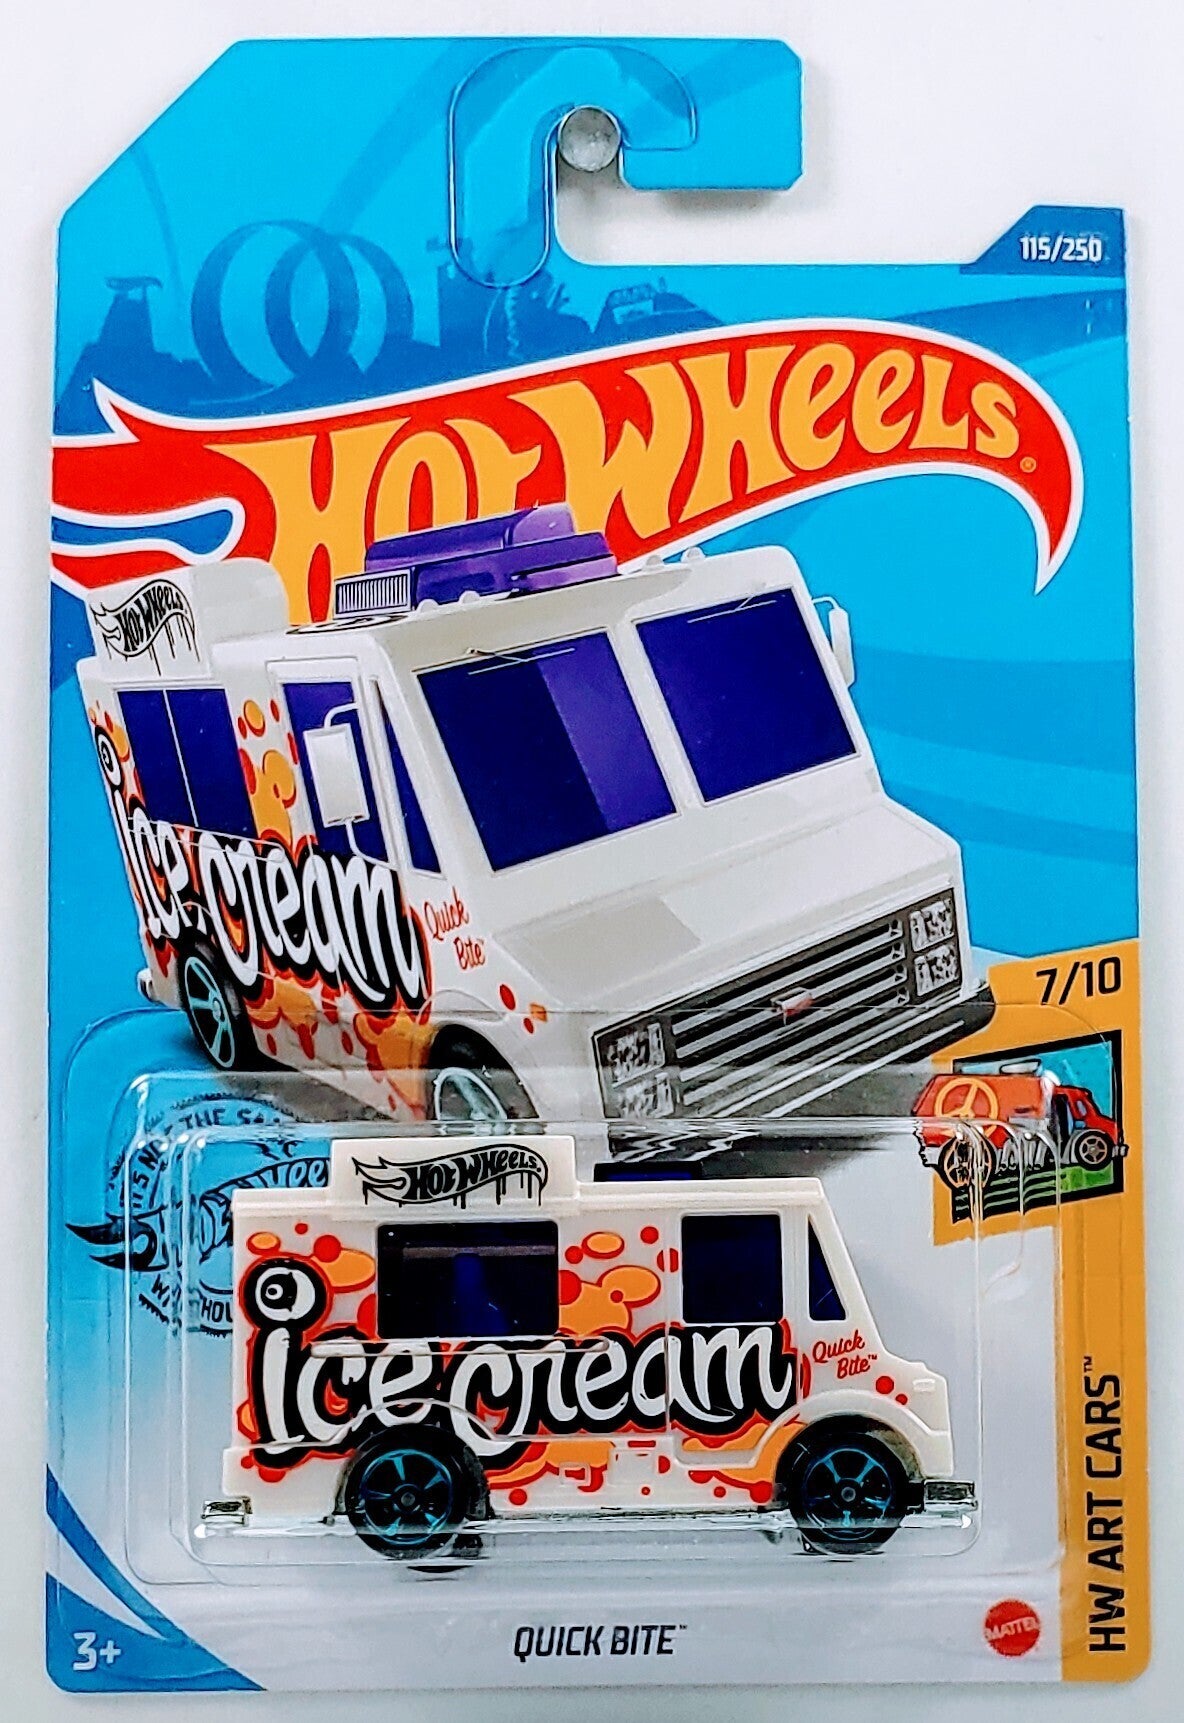 Hot Wheels 2020 - Collector # 115/250 - HW Art Cars 7/10 - Quick Bite - White / Ice Cream